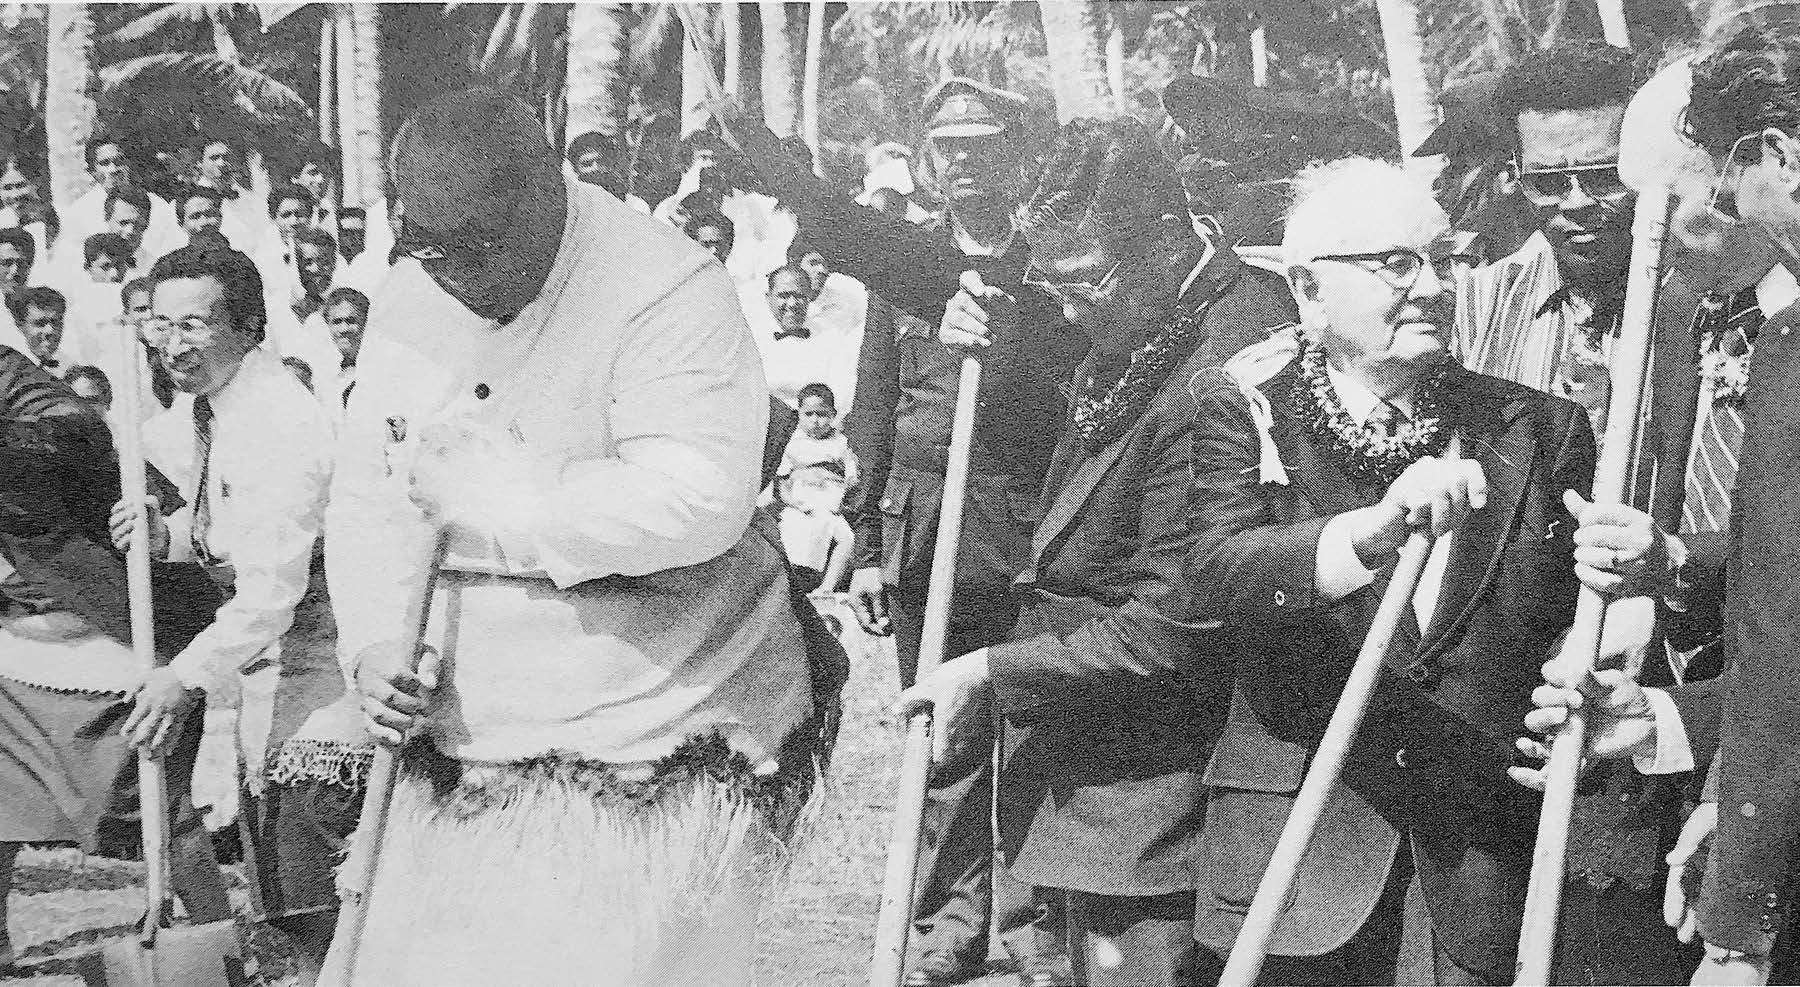 President Spencer W. Kimball and His Majesty King Taufa‘ahau Tupou IV at the groundbreaking of the temple. Courtesy of Kakolosi Kioa Tu‘ione.